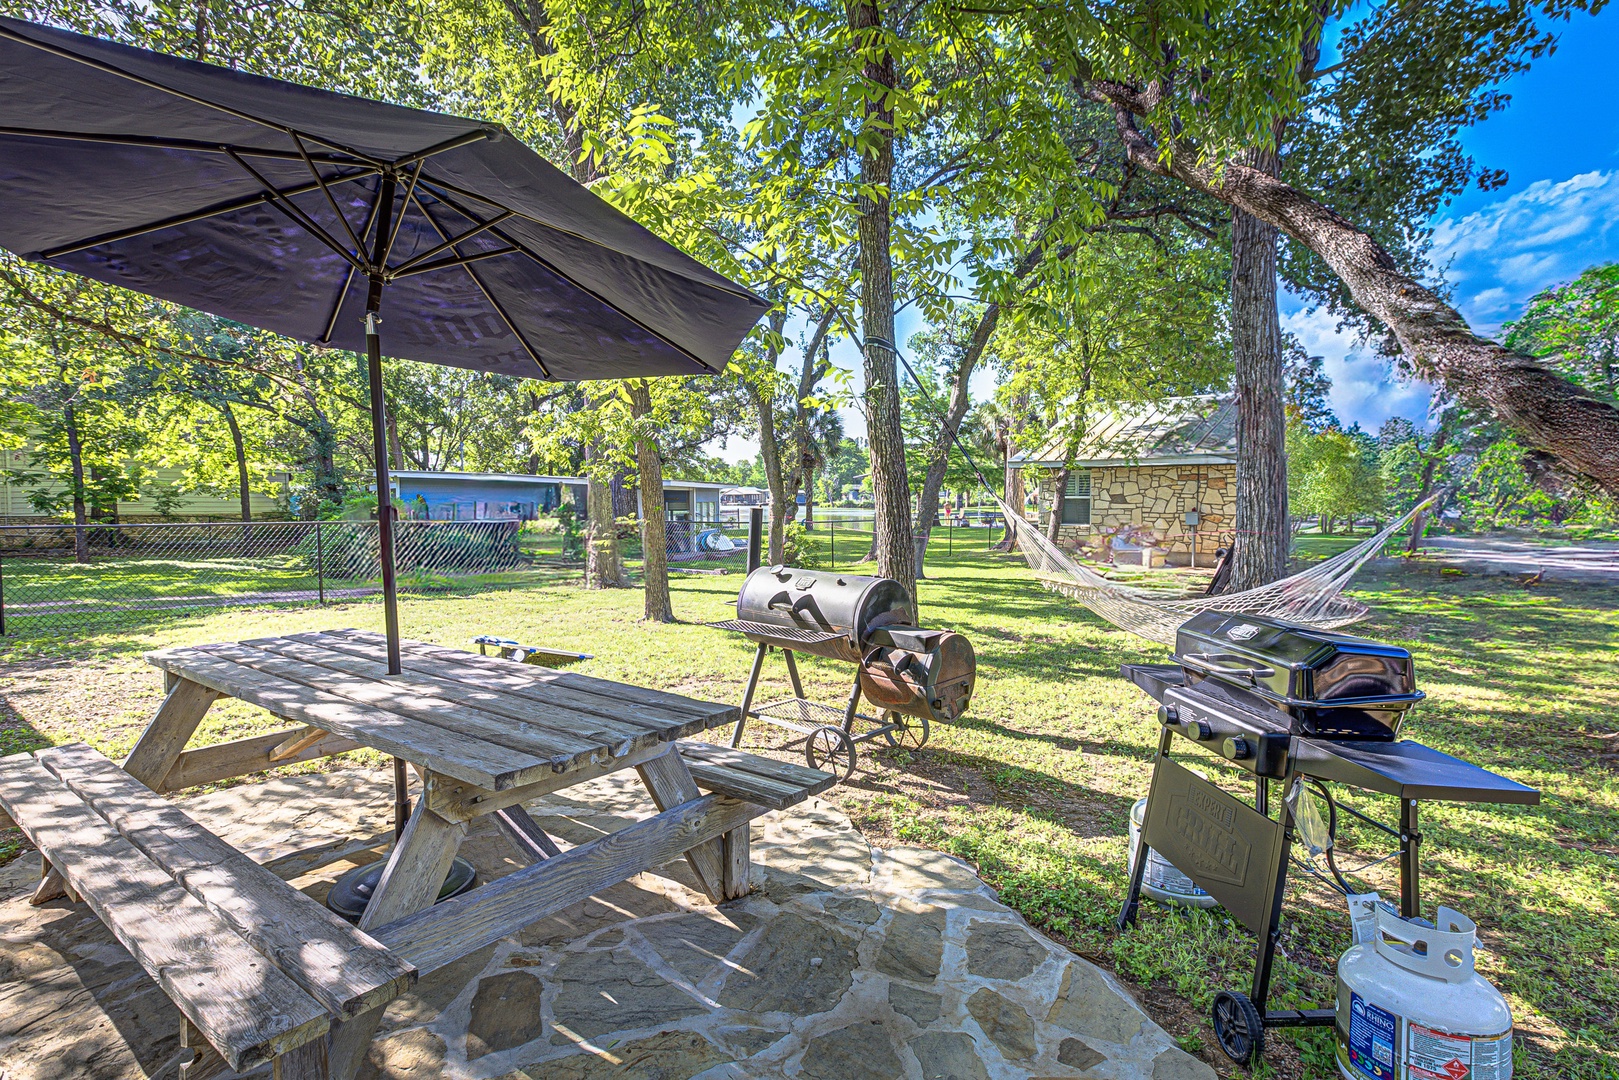 Outdoor dining, hammock, BBQ grill, cornhole